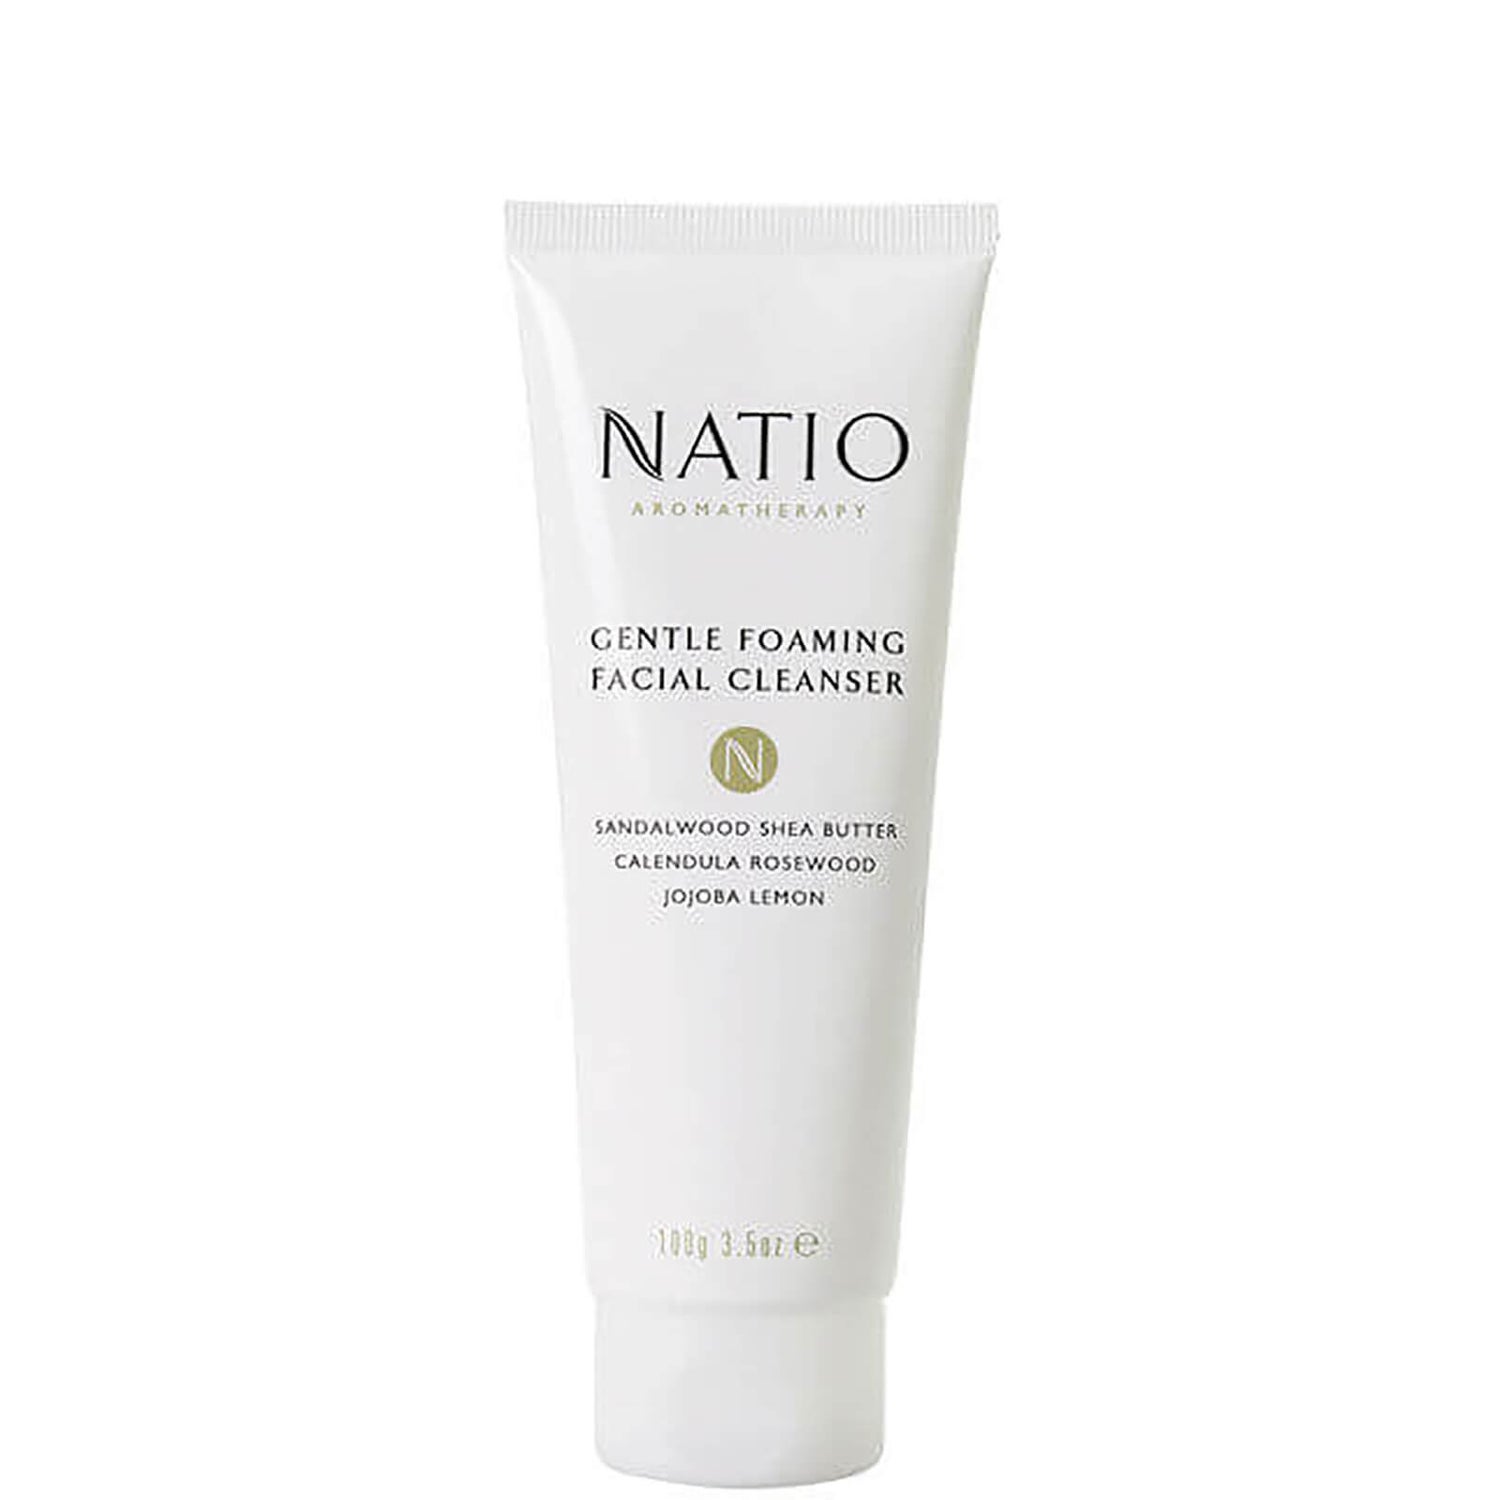 Natio Gentle Foaming Facial Cleanser (3.5oz)